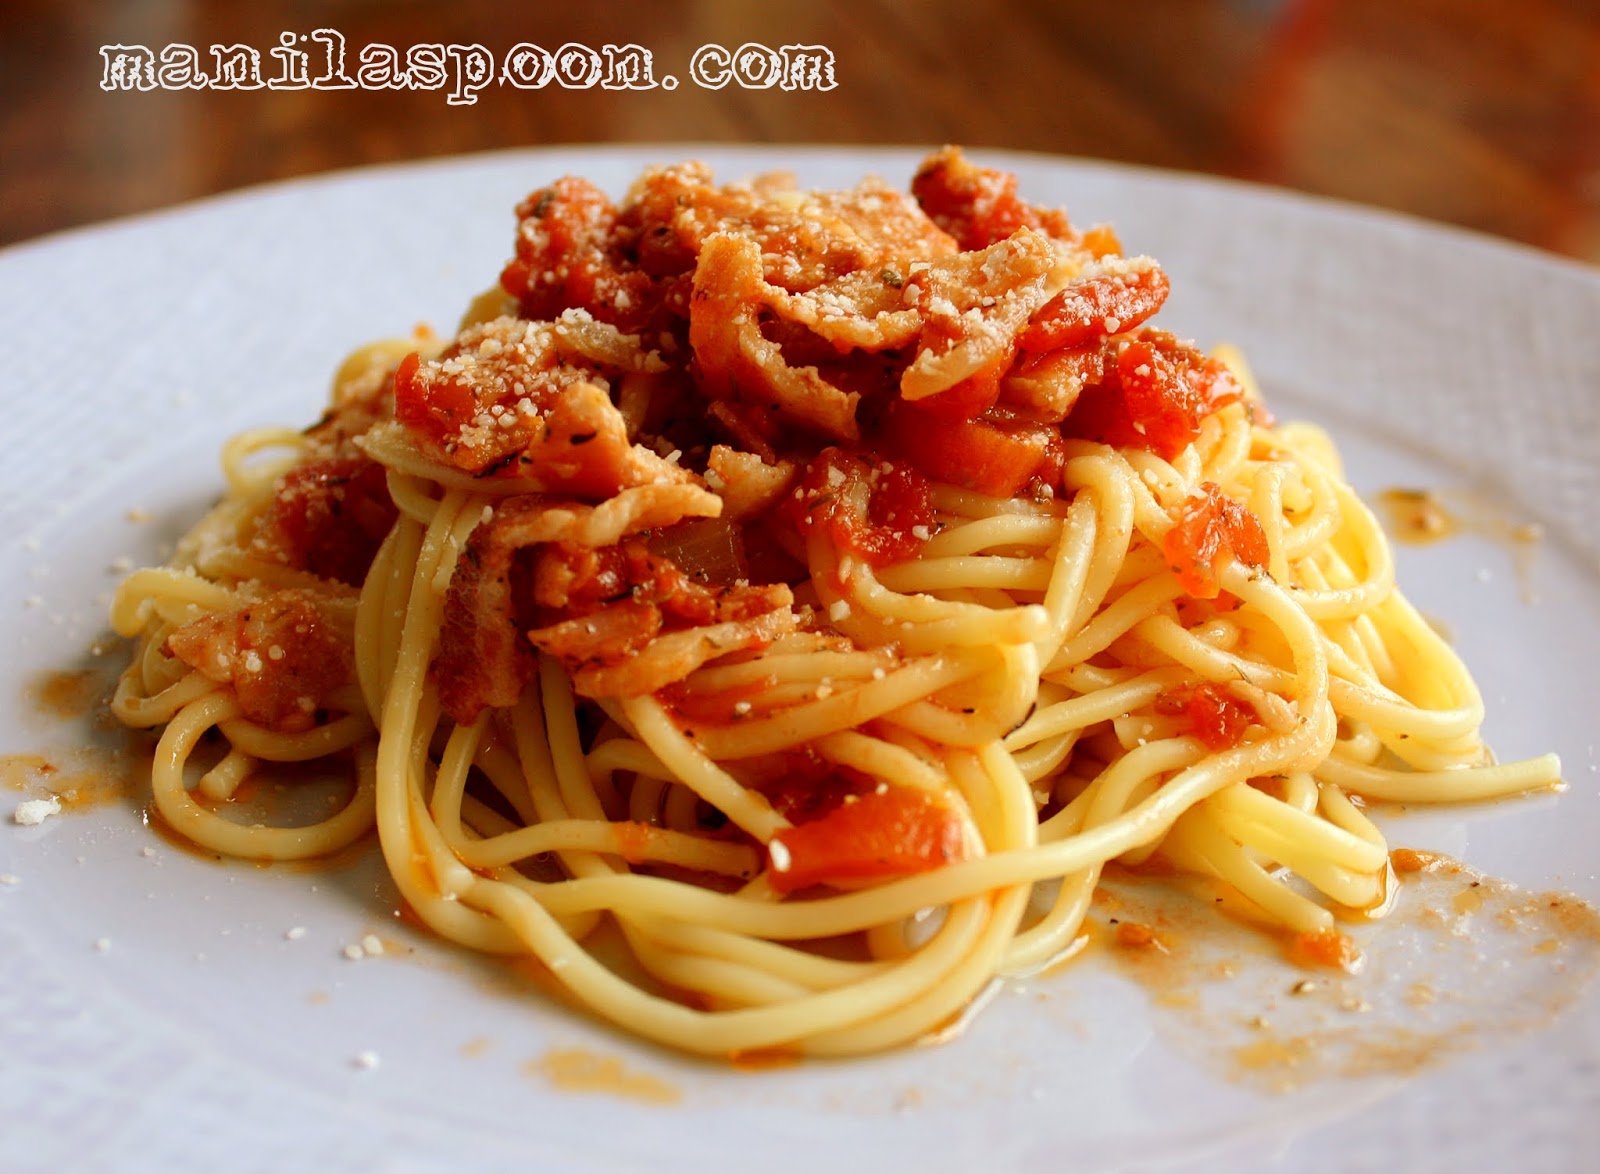 Spaghetti All’amatriciana (Spaghetti with Bacon and Onion)